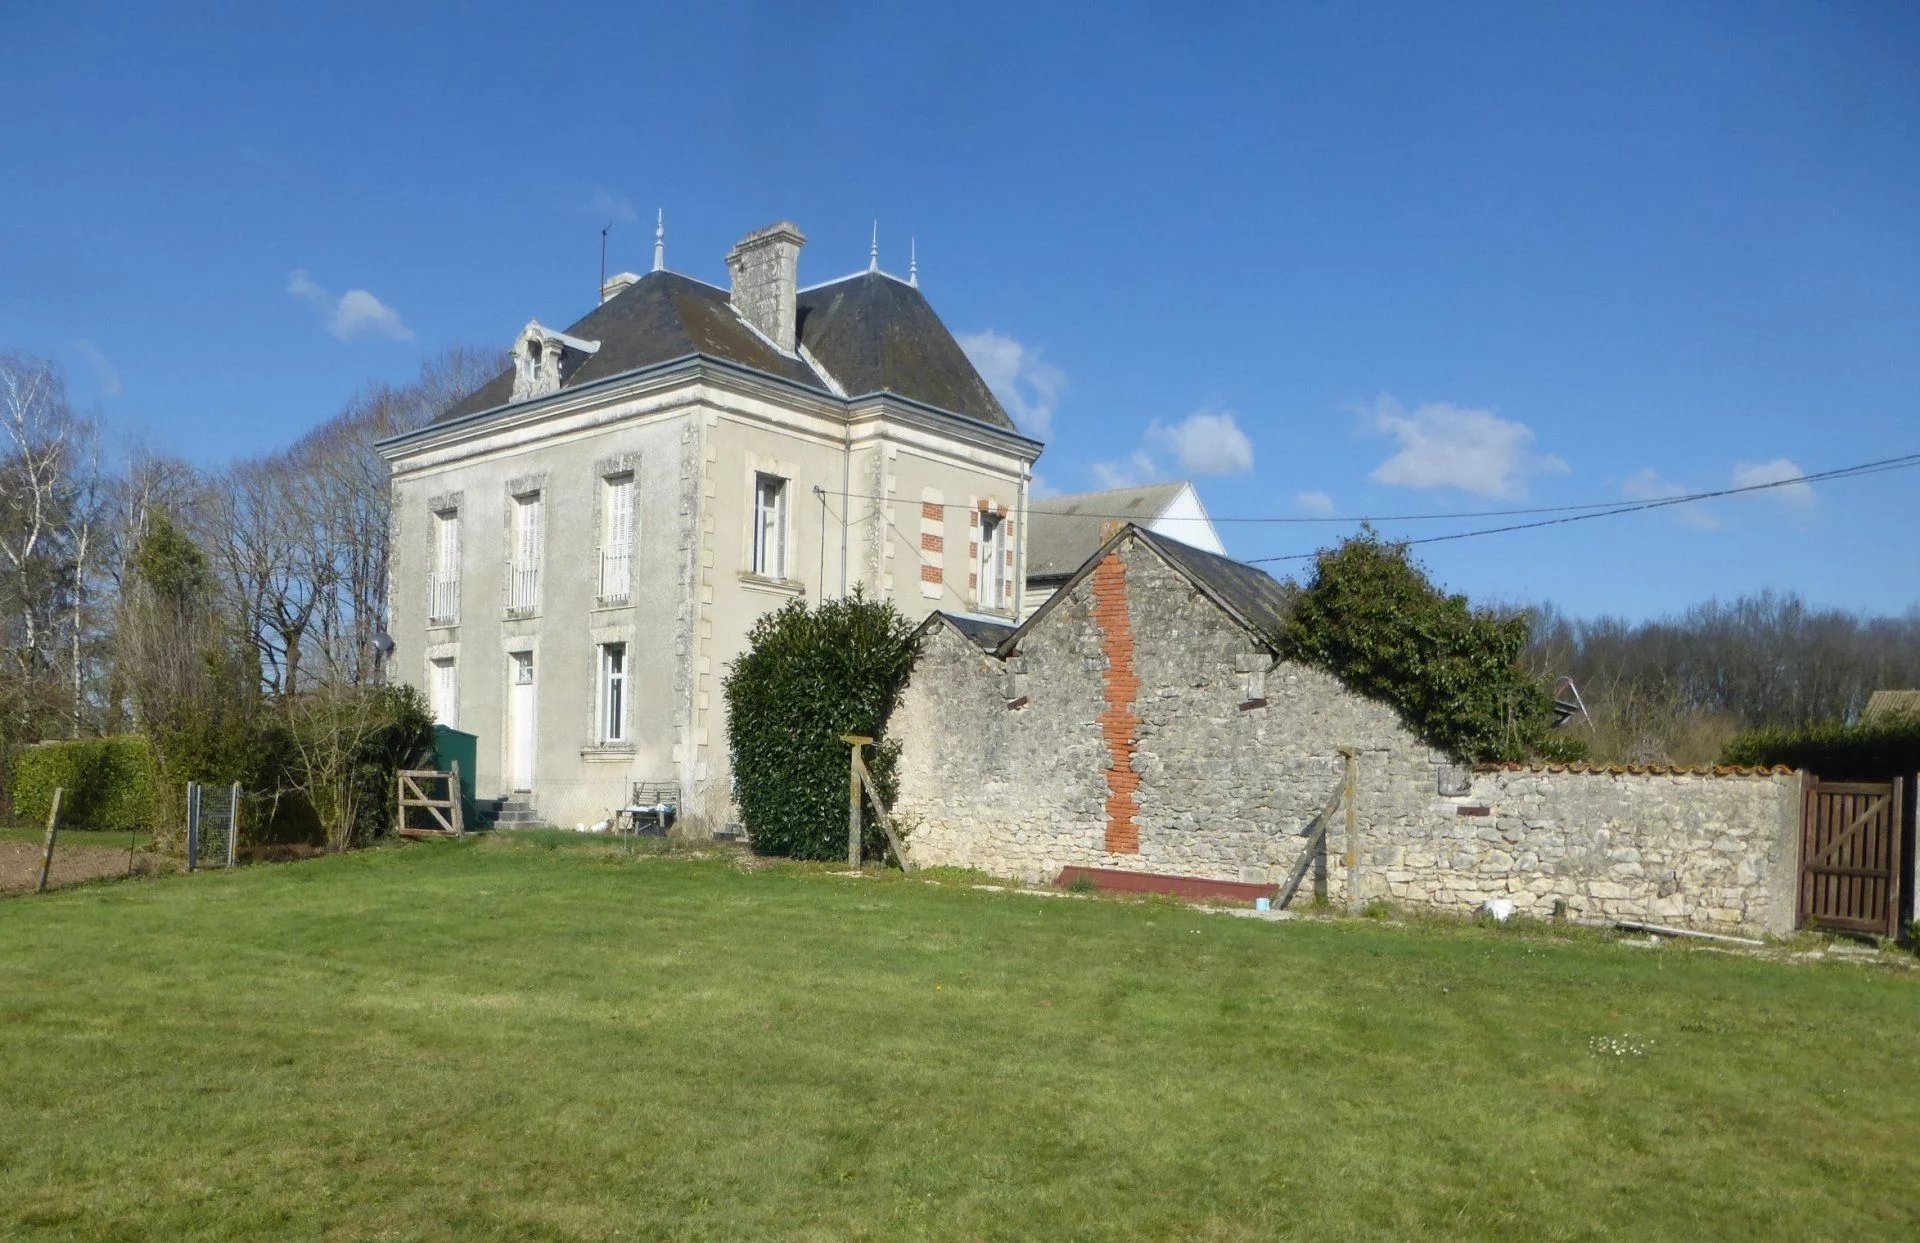 Maison de maitre and coach house with income potential